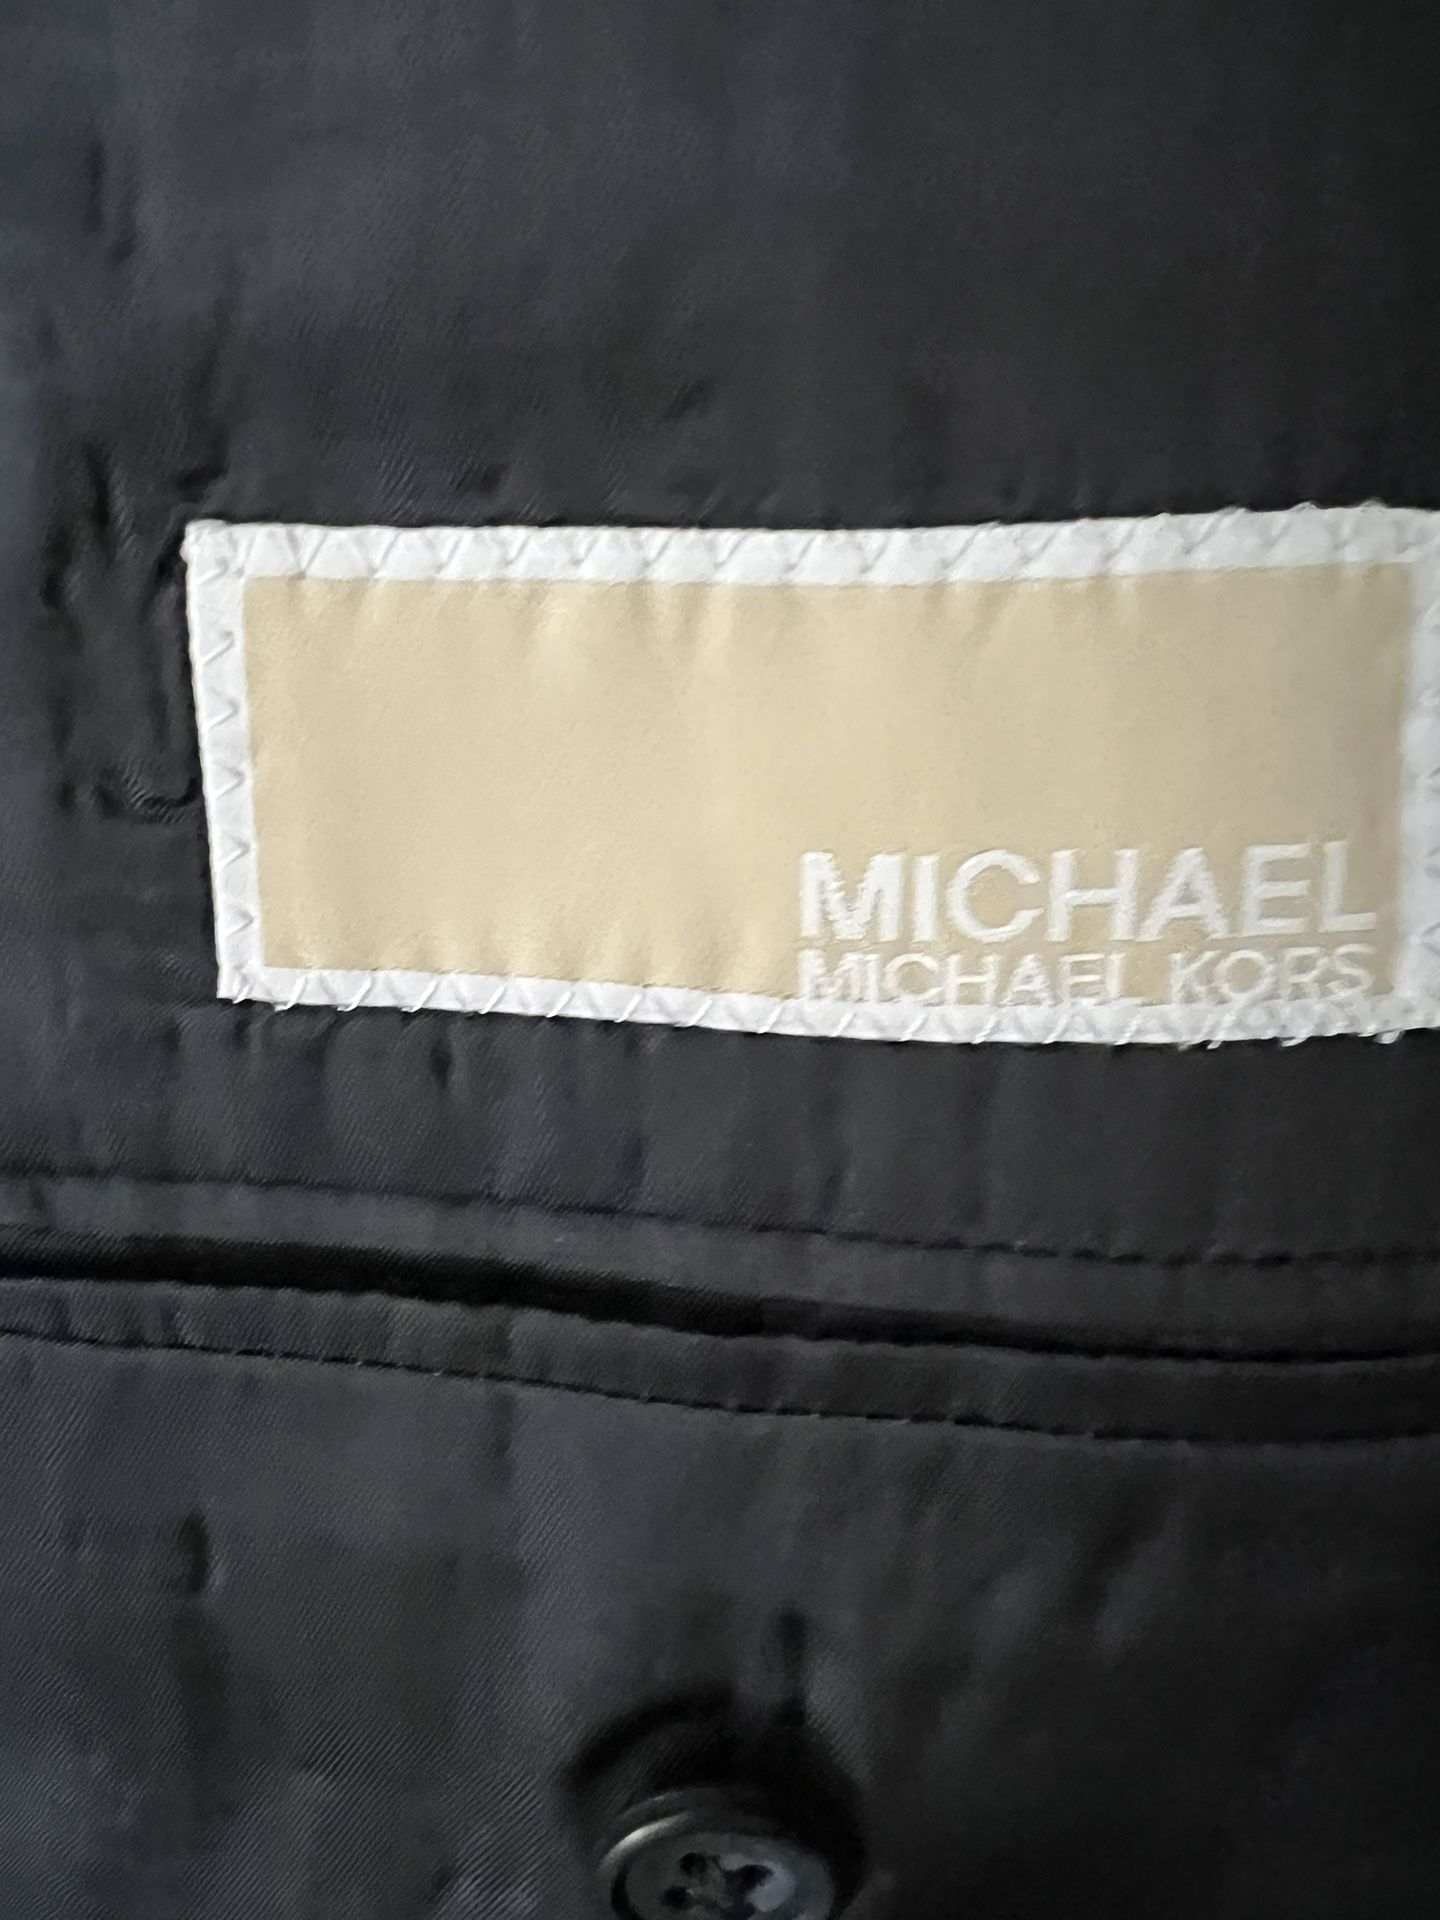 Michael Kors men’s Blazer $75